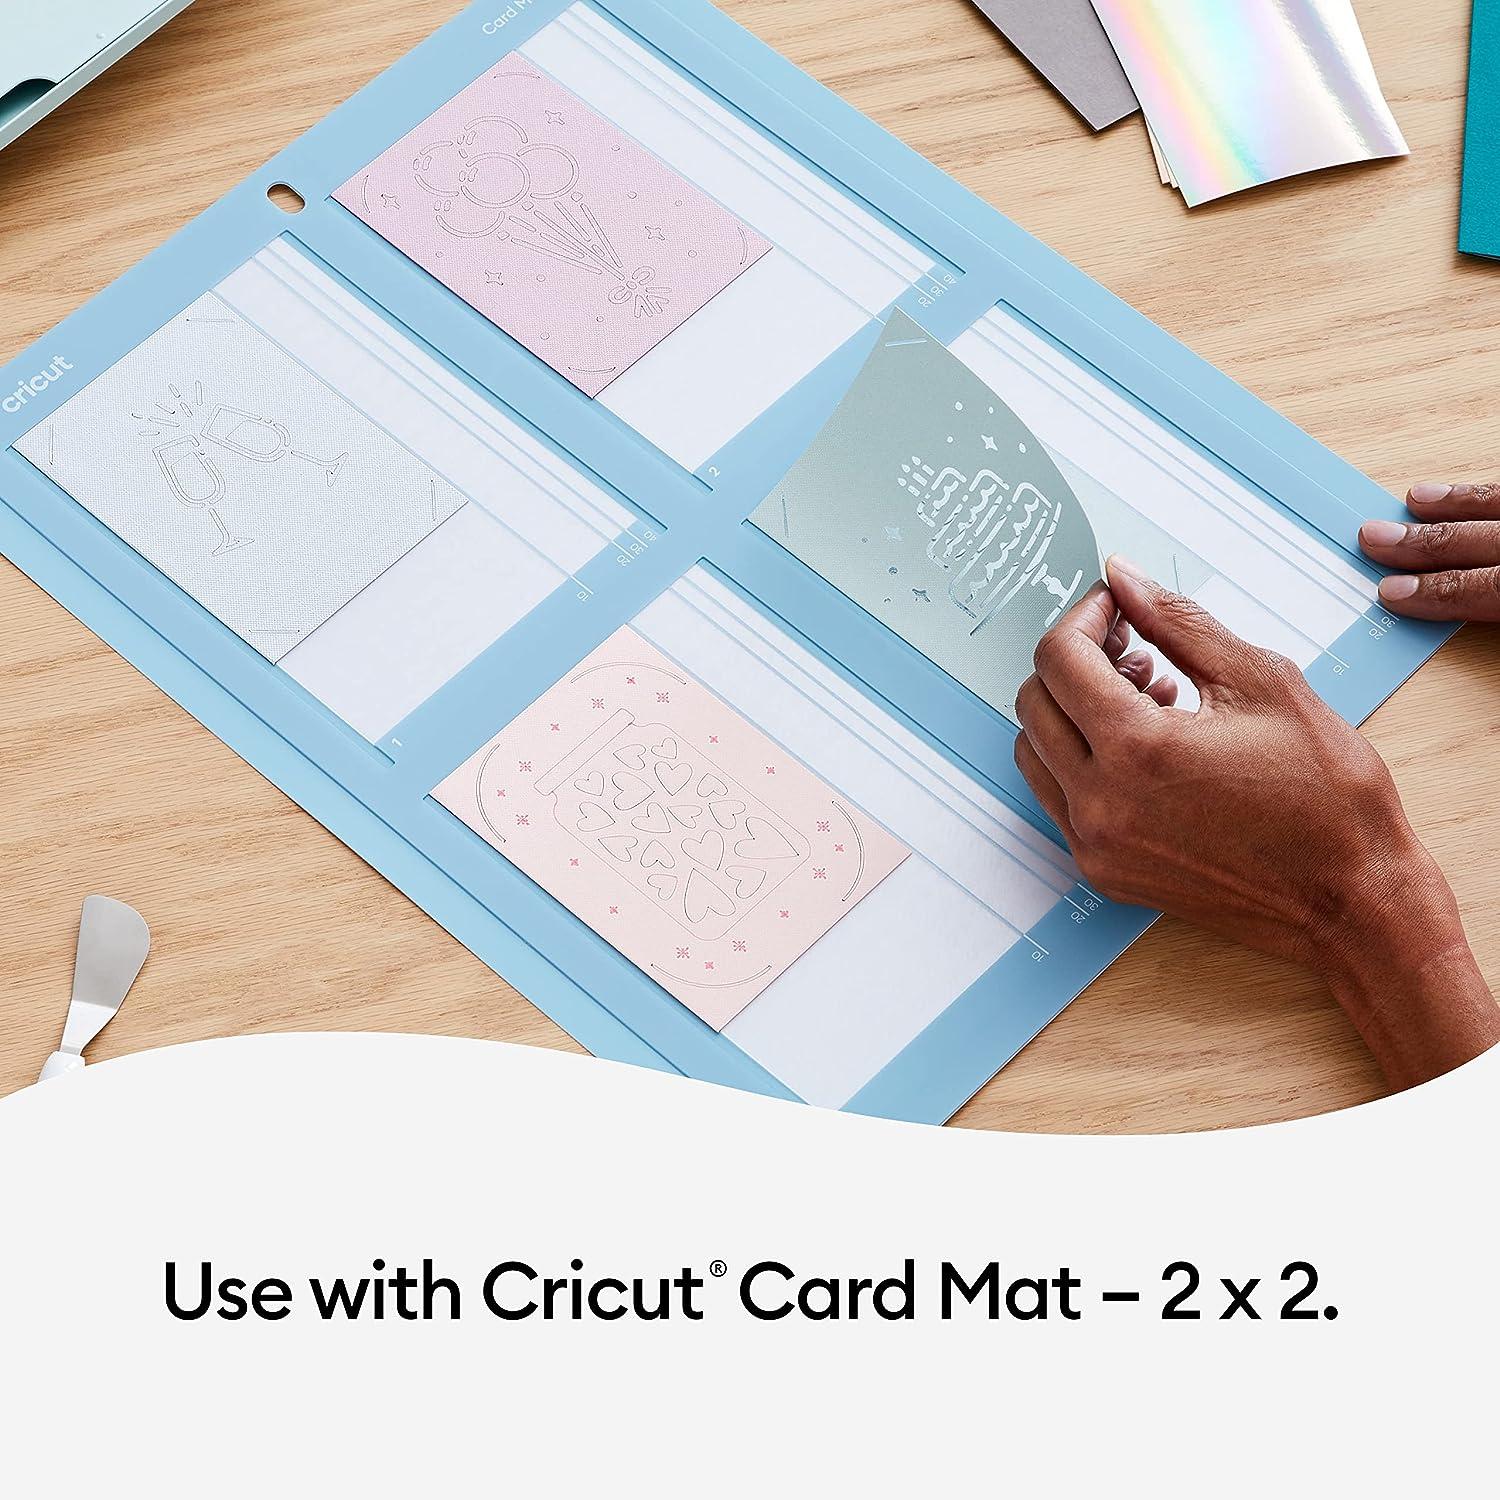 How To Use the Cricut Card Mat 2x2